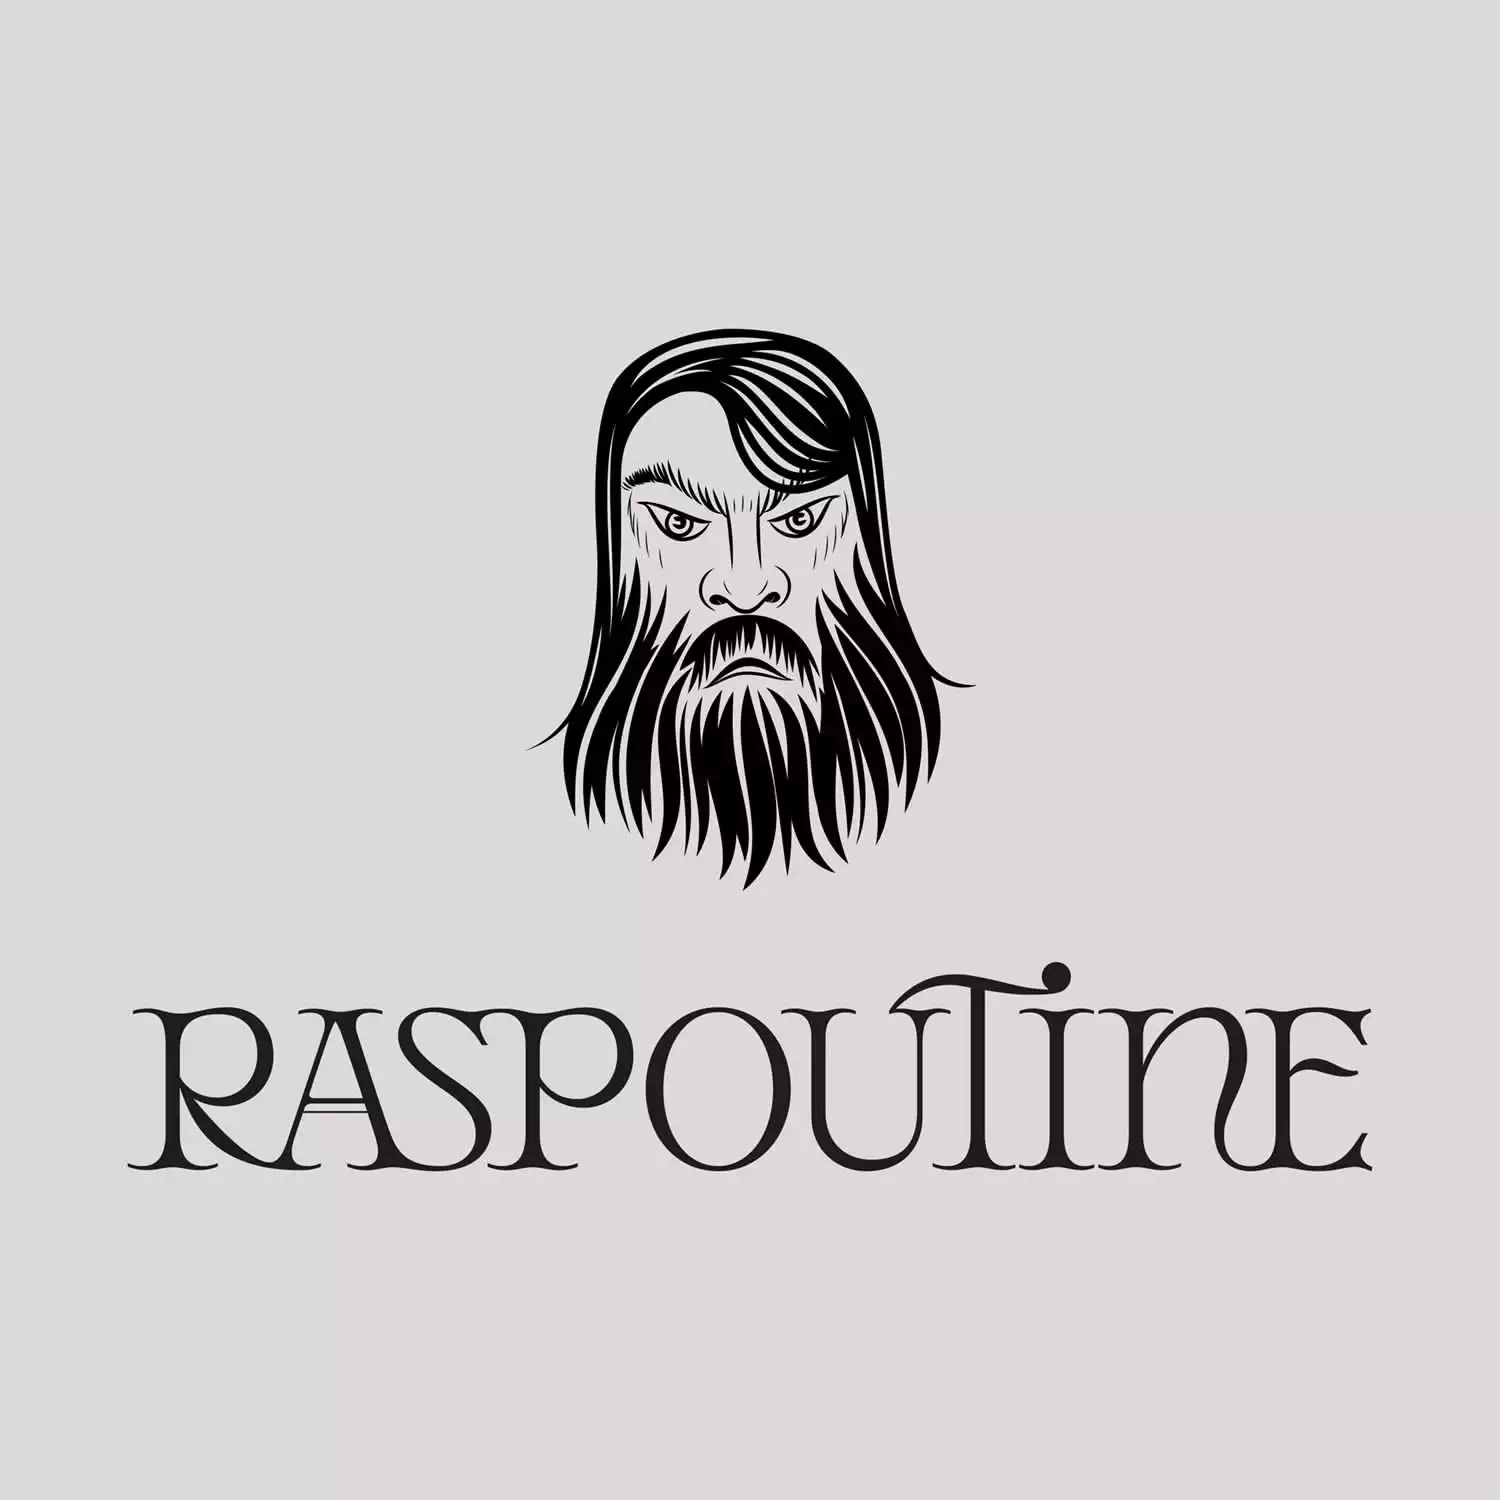 Raspoutine Brand